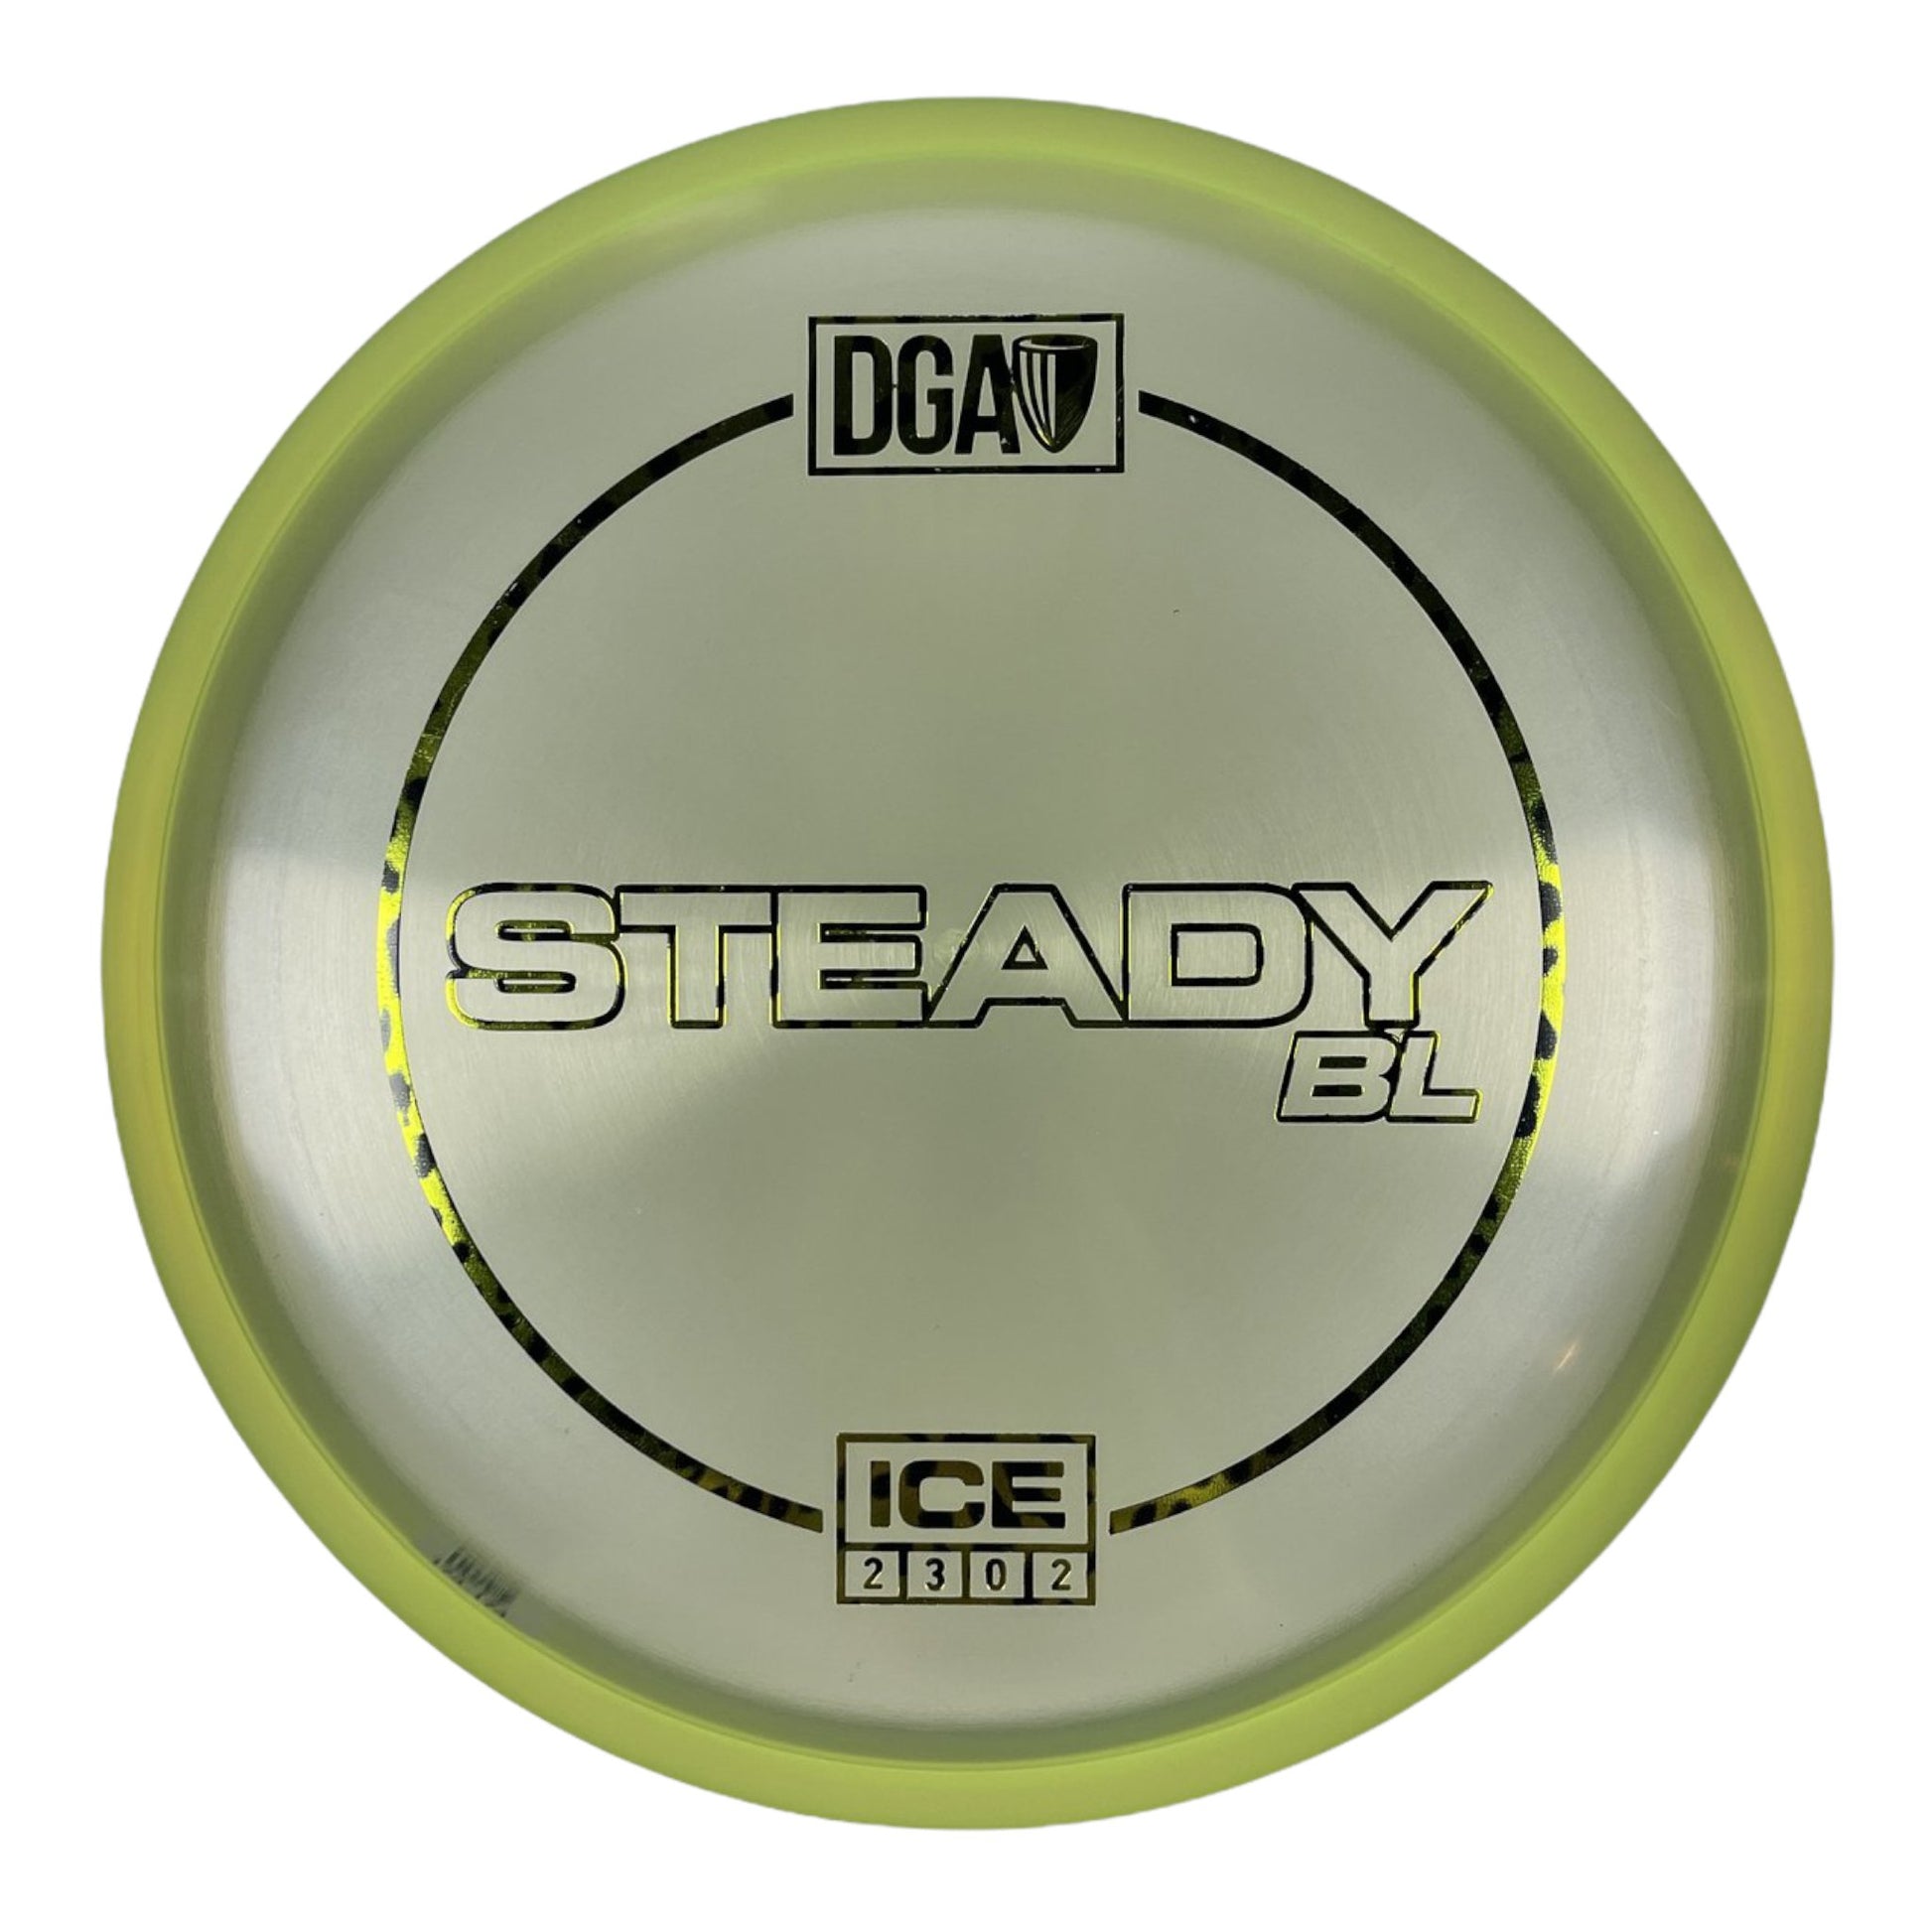 DGA Steady BL | ICE | Yellow/Multi 174g Disc Golf